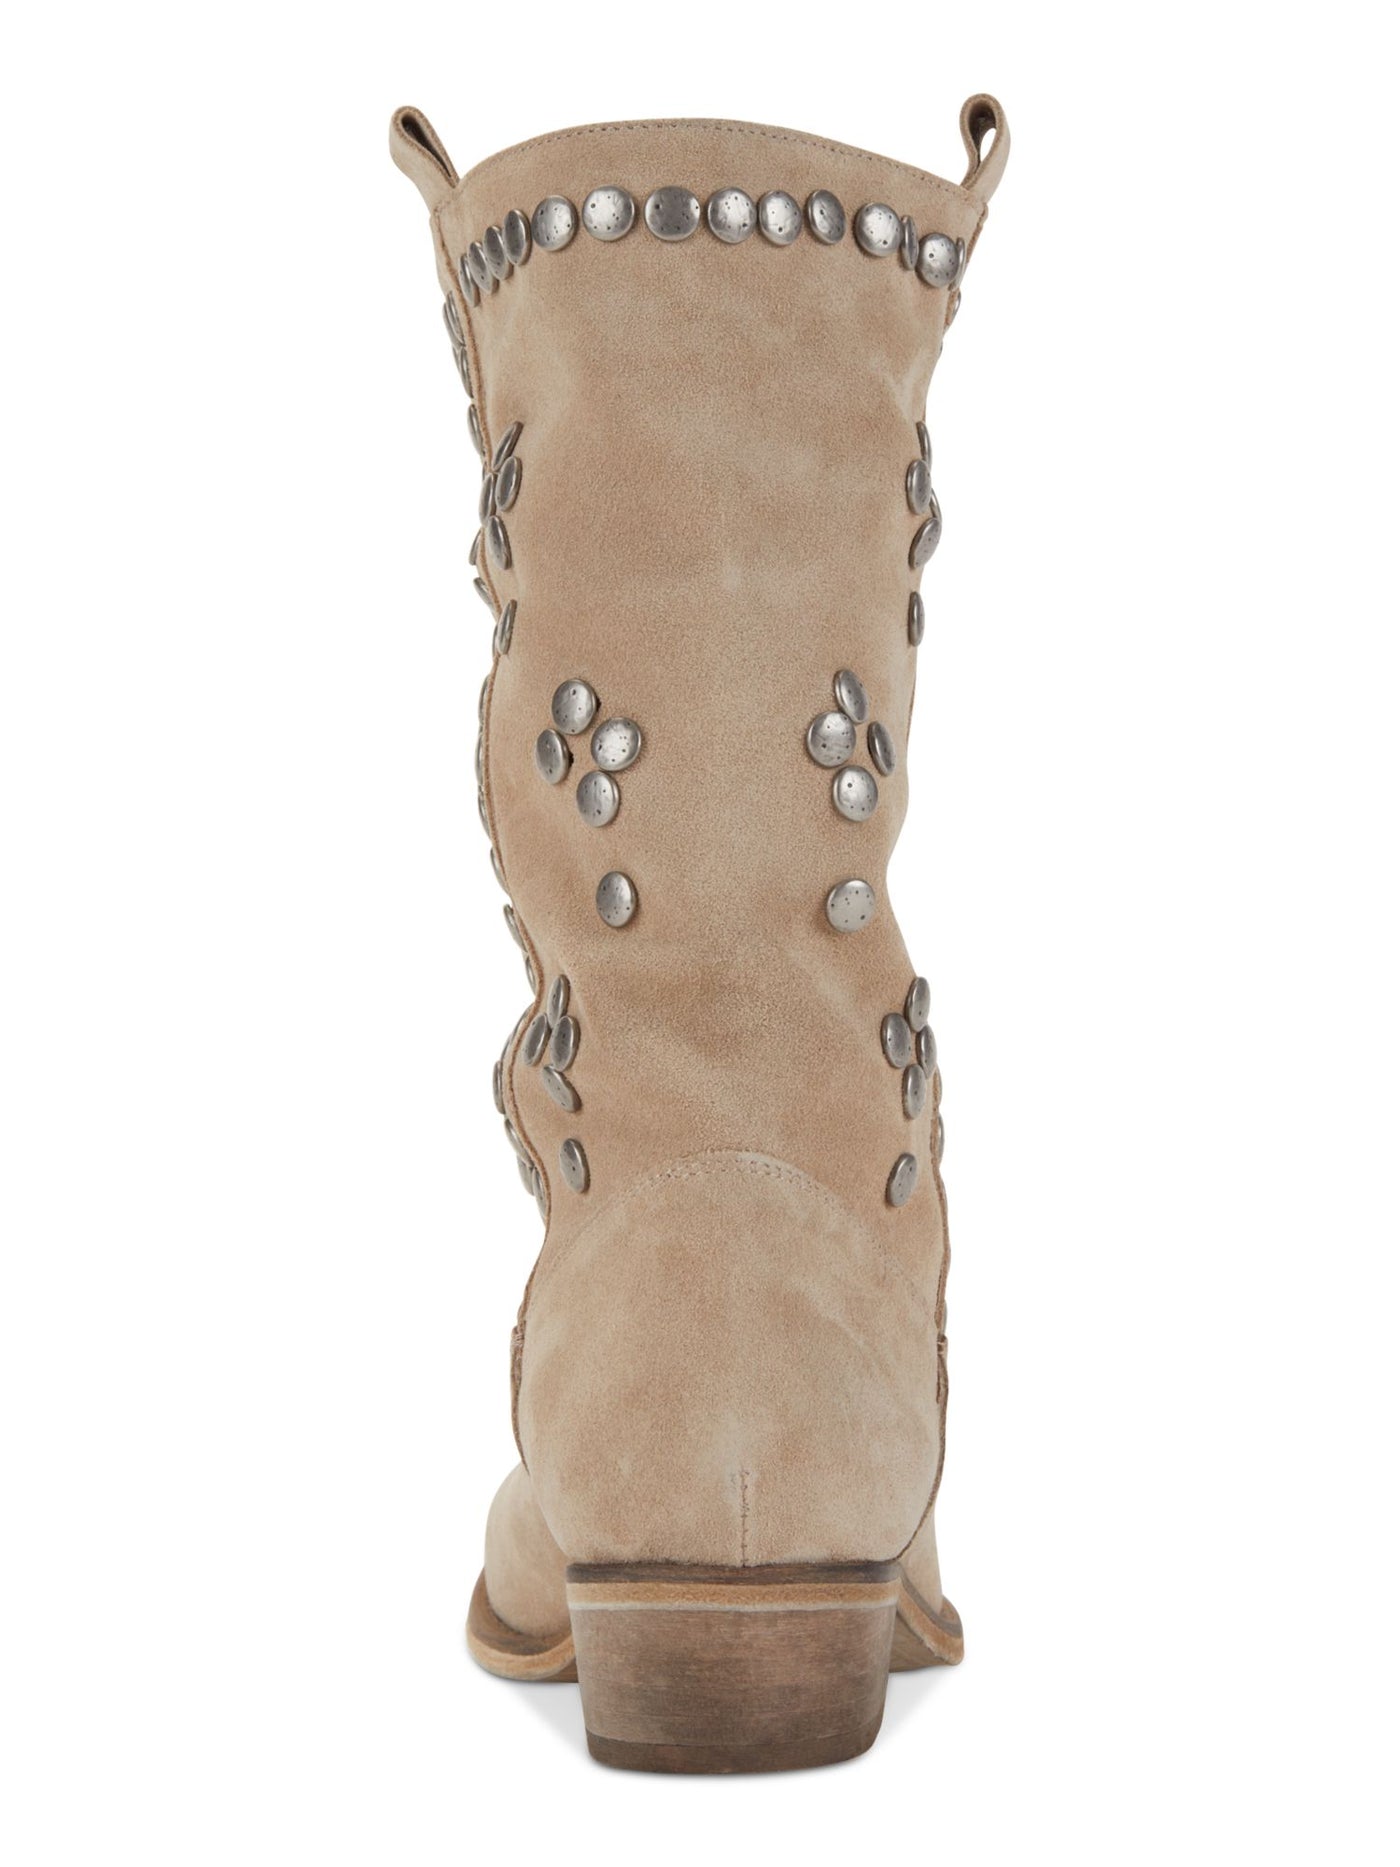 DKNY Womens Beige Studded Zari Round Toe Block Heel Leather Cowboy Boots 10